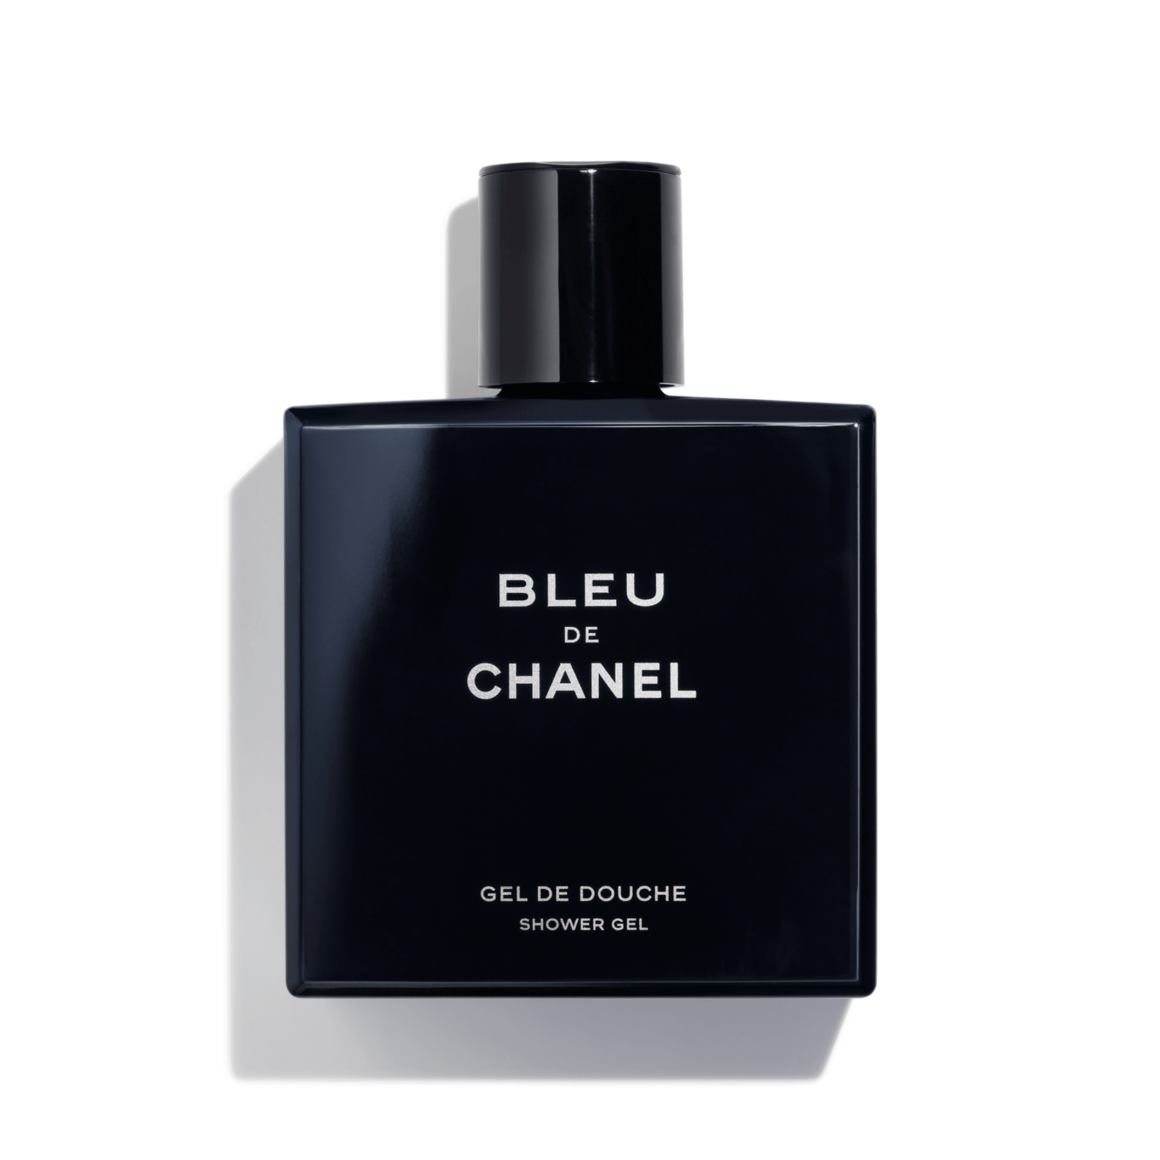 Bleu de Chanel, men's spring scents